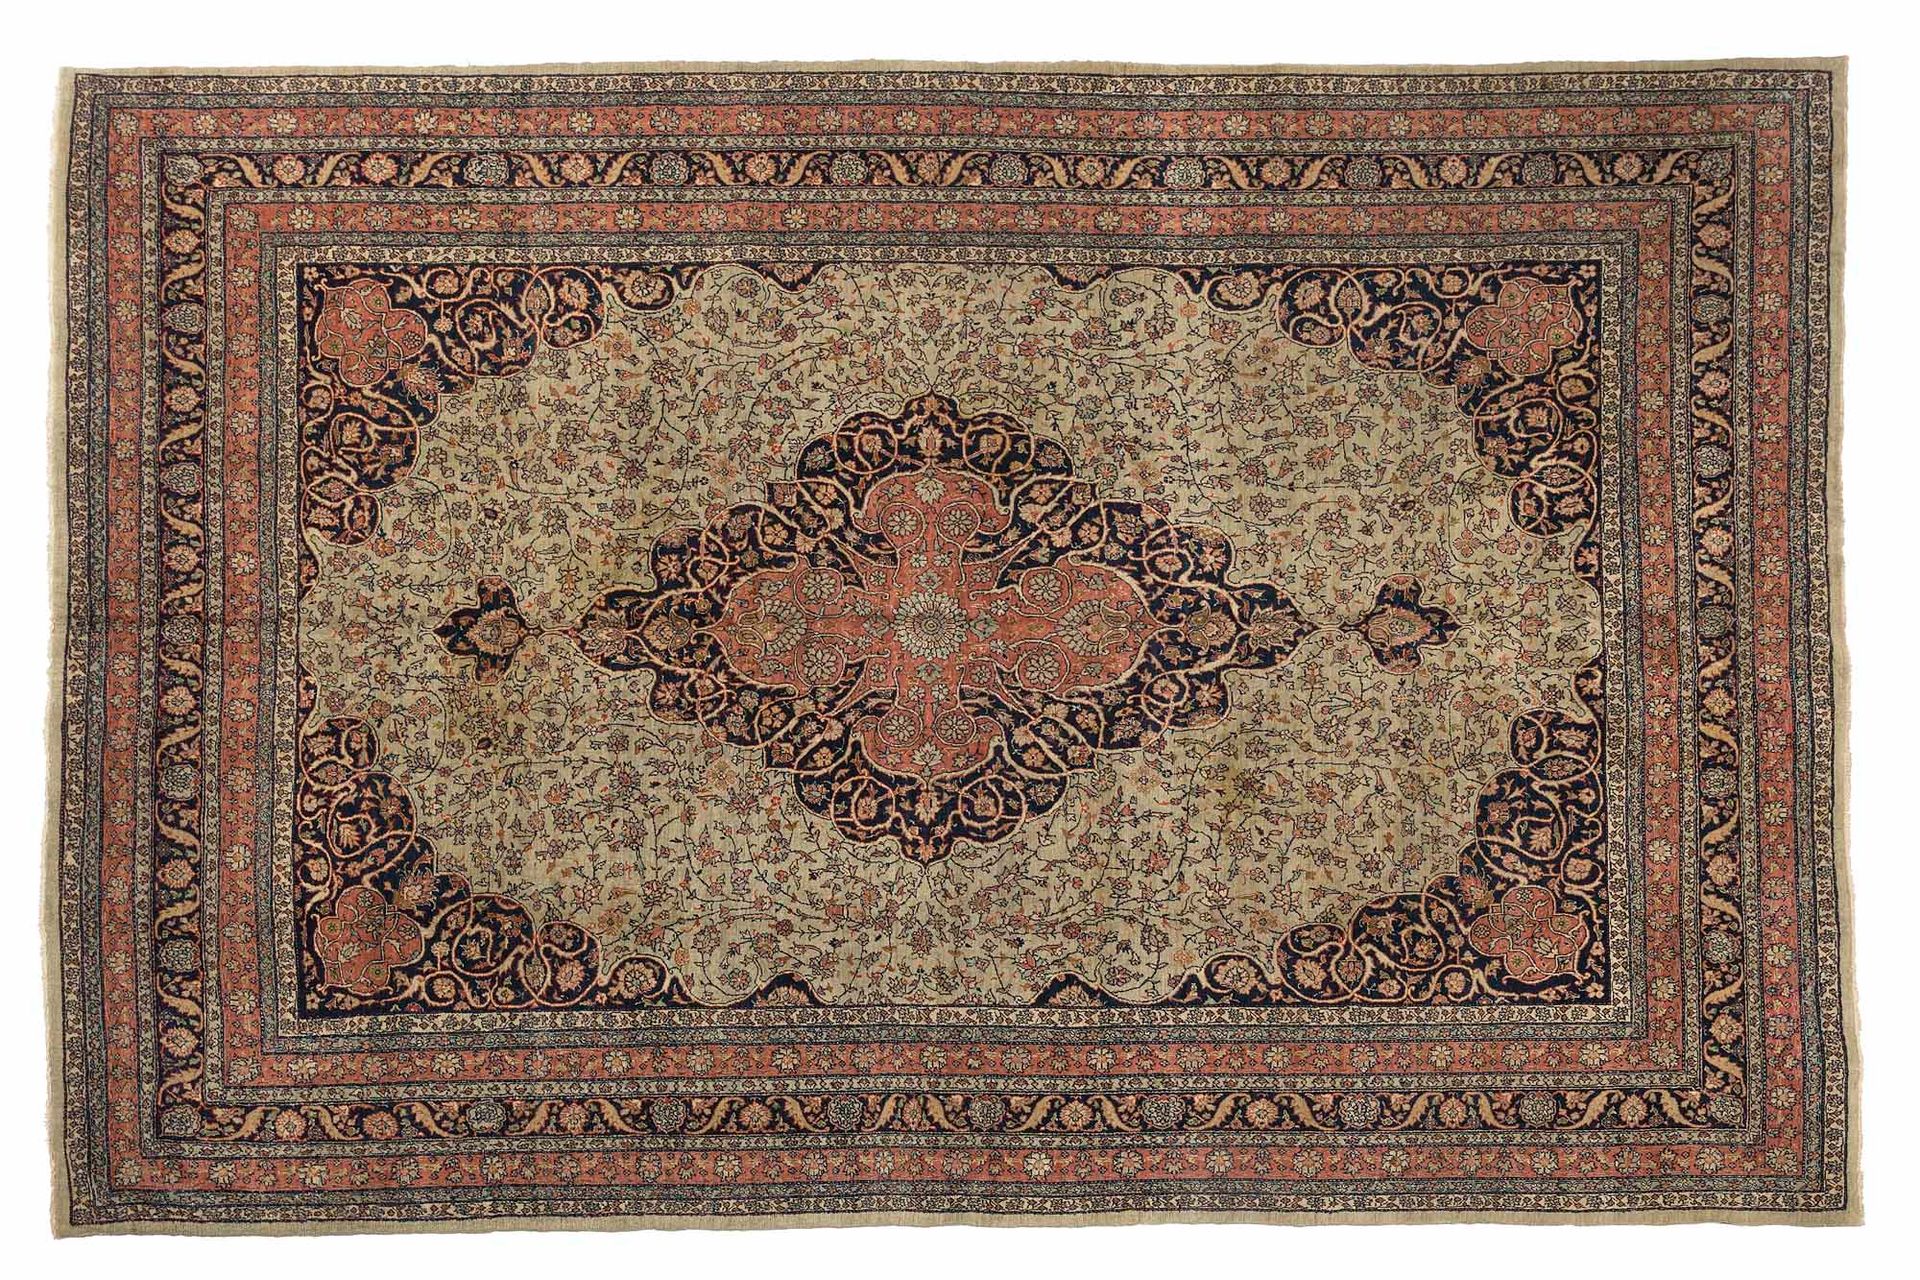 Null SIVAS-SEBASTIA carpet (Asia Minor), late 19th century, early 20th century

&hellip;